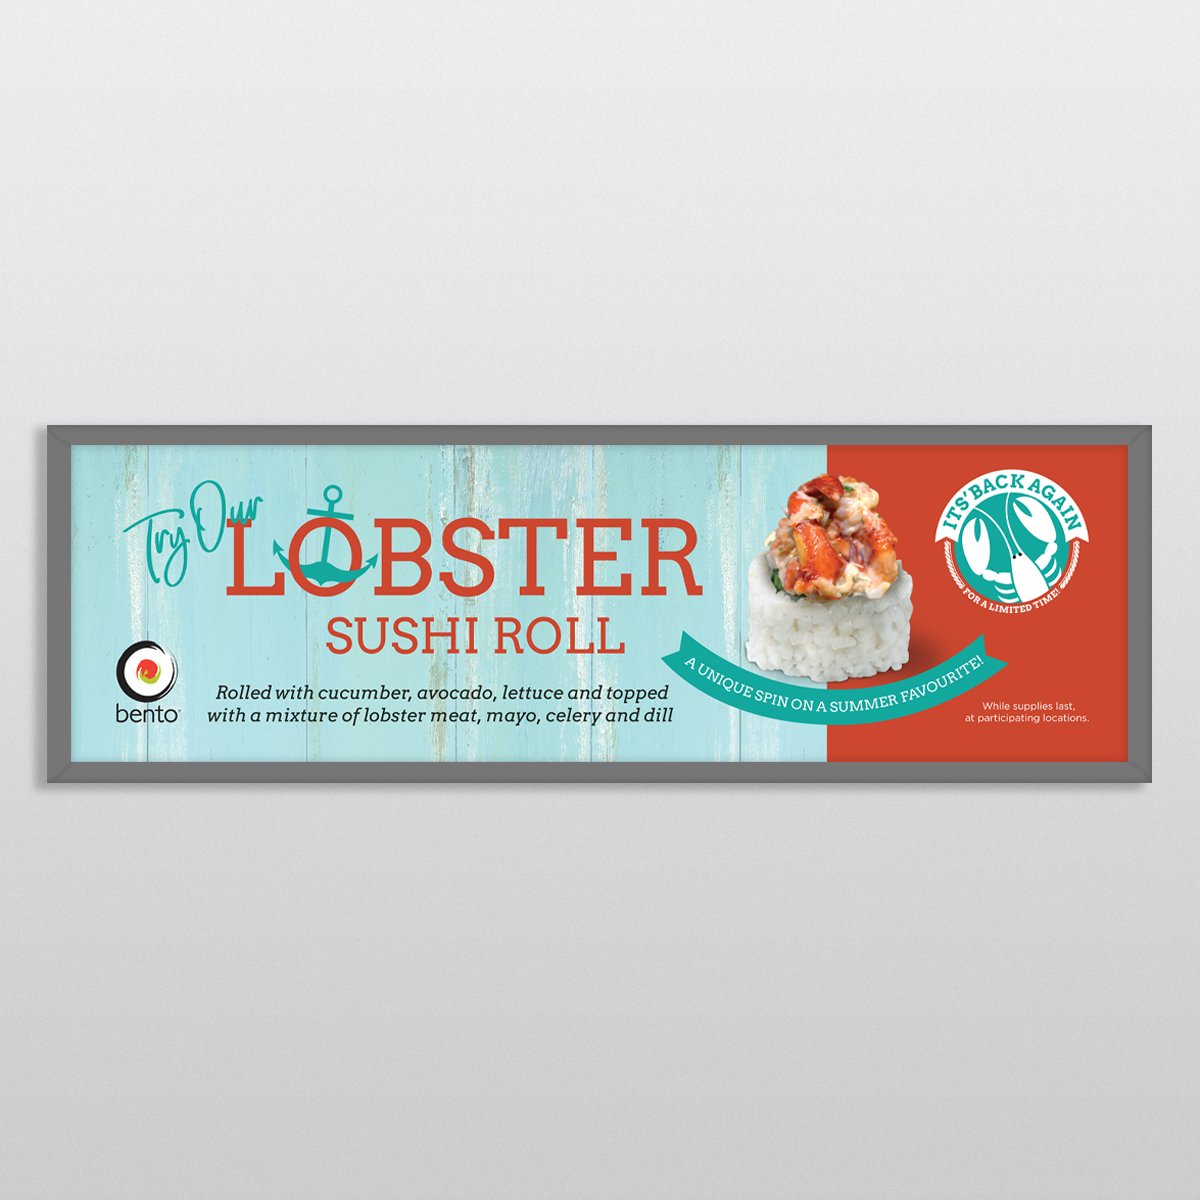 Bento_Lobster_LED copy.jpg